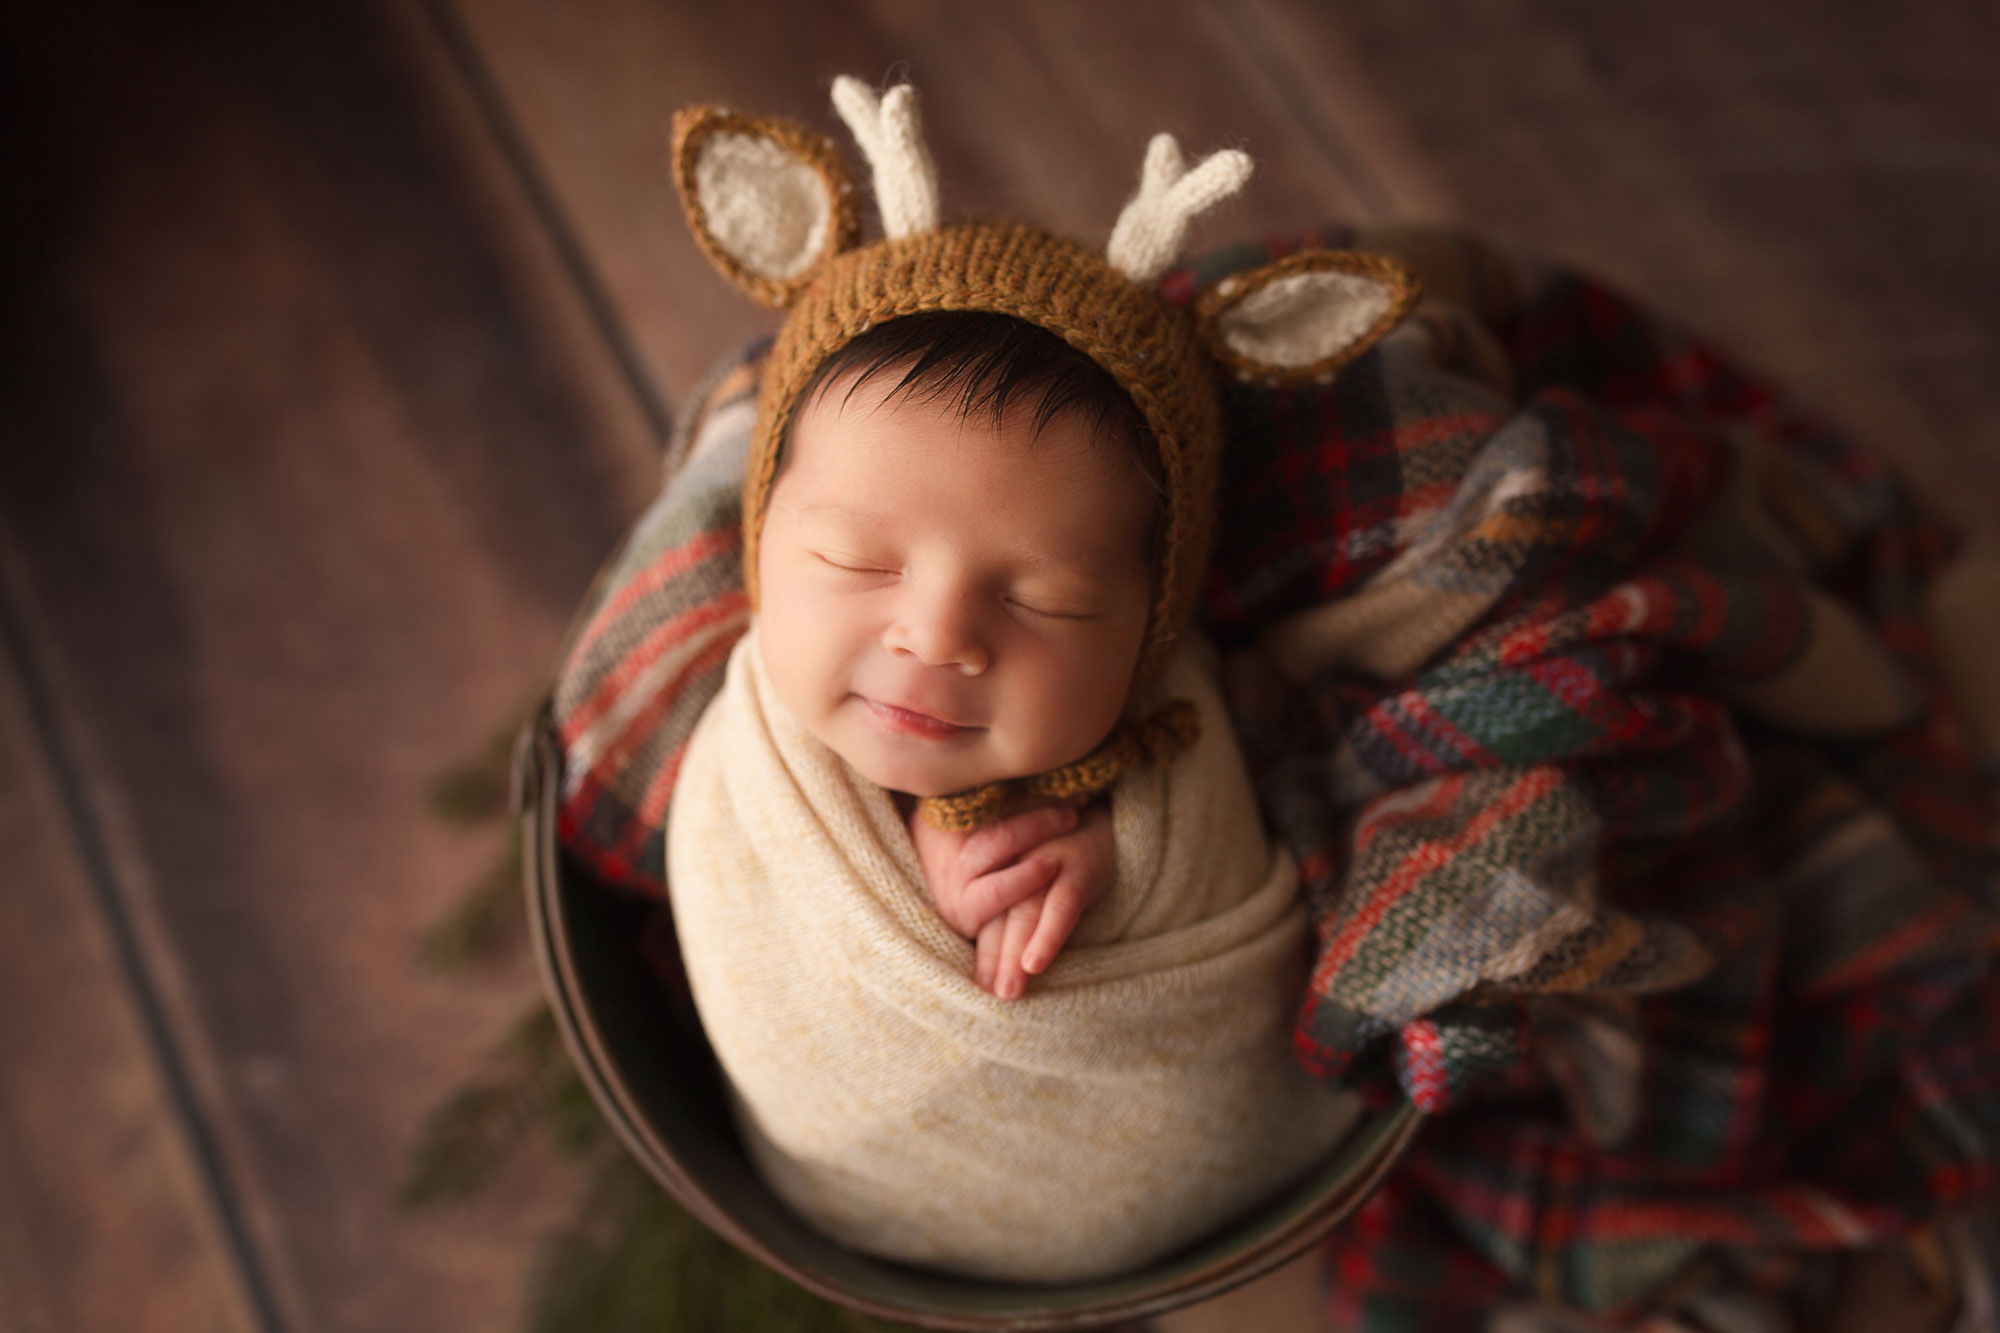 hunterdon county nj baby with a reindeer bonnet christmas set up